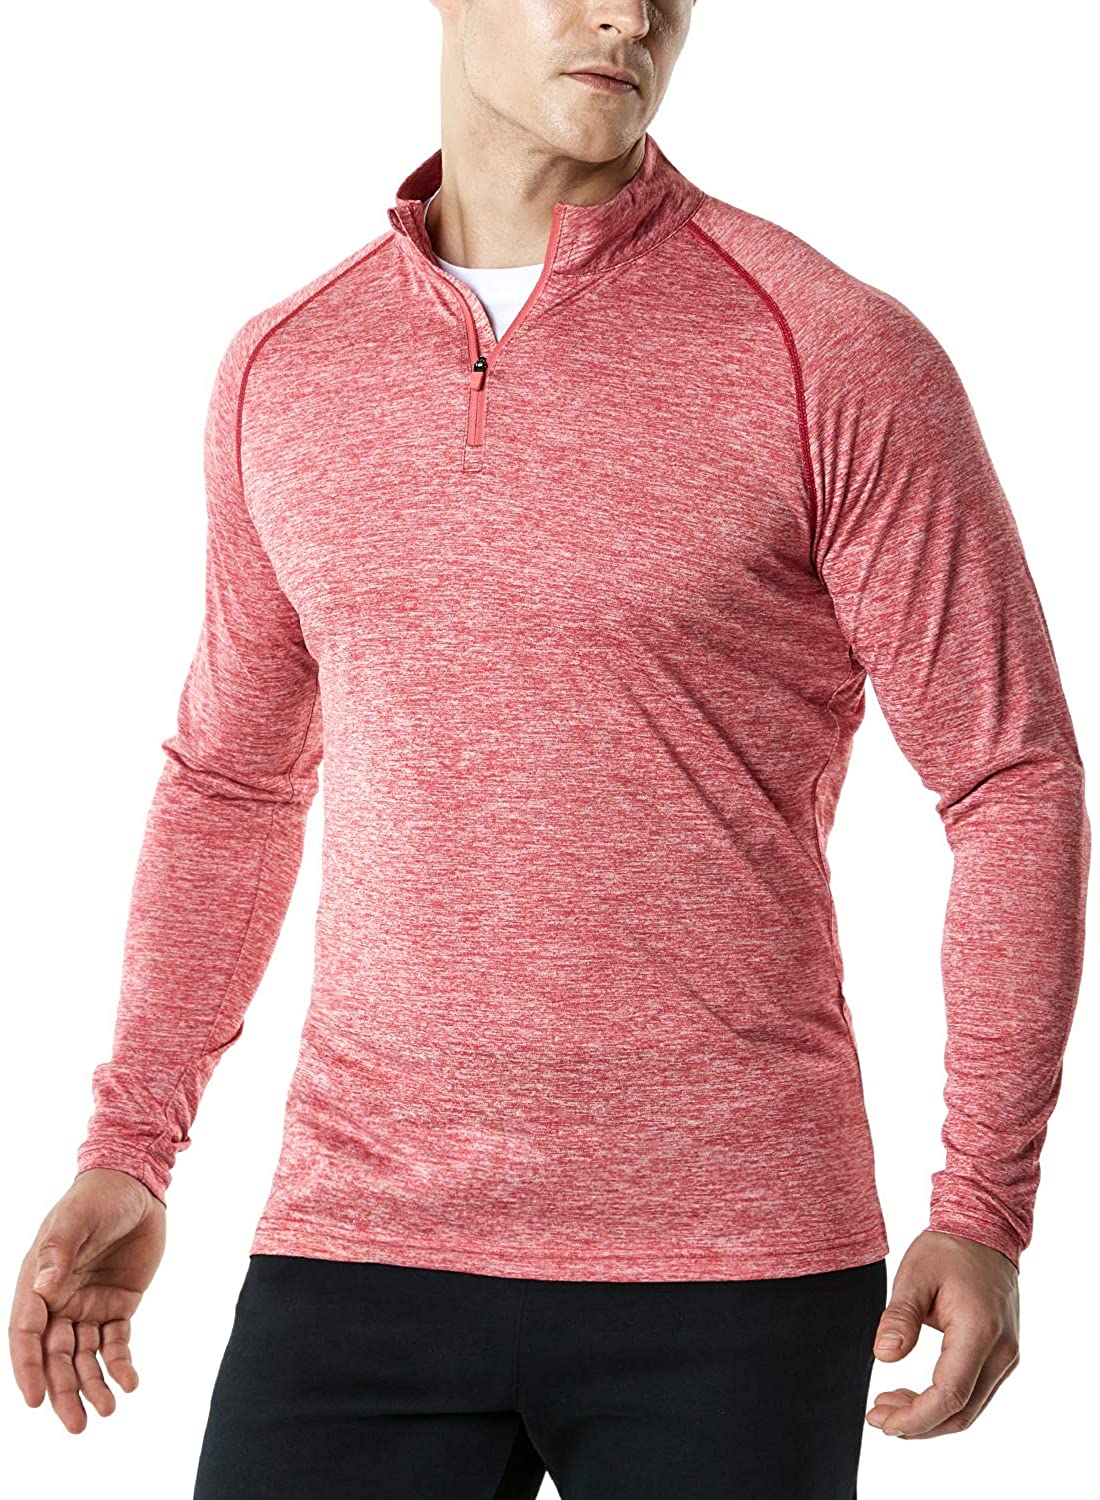 TSLA Mens 1/4 Zip Pullover Long Sleeve Shirt Athletic Quarter Zip T-Shirt Quick Dry Performance Running Top 